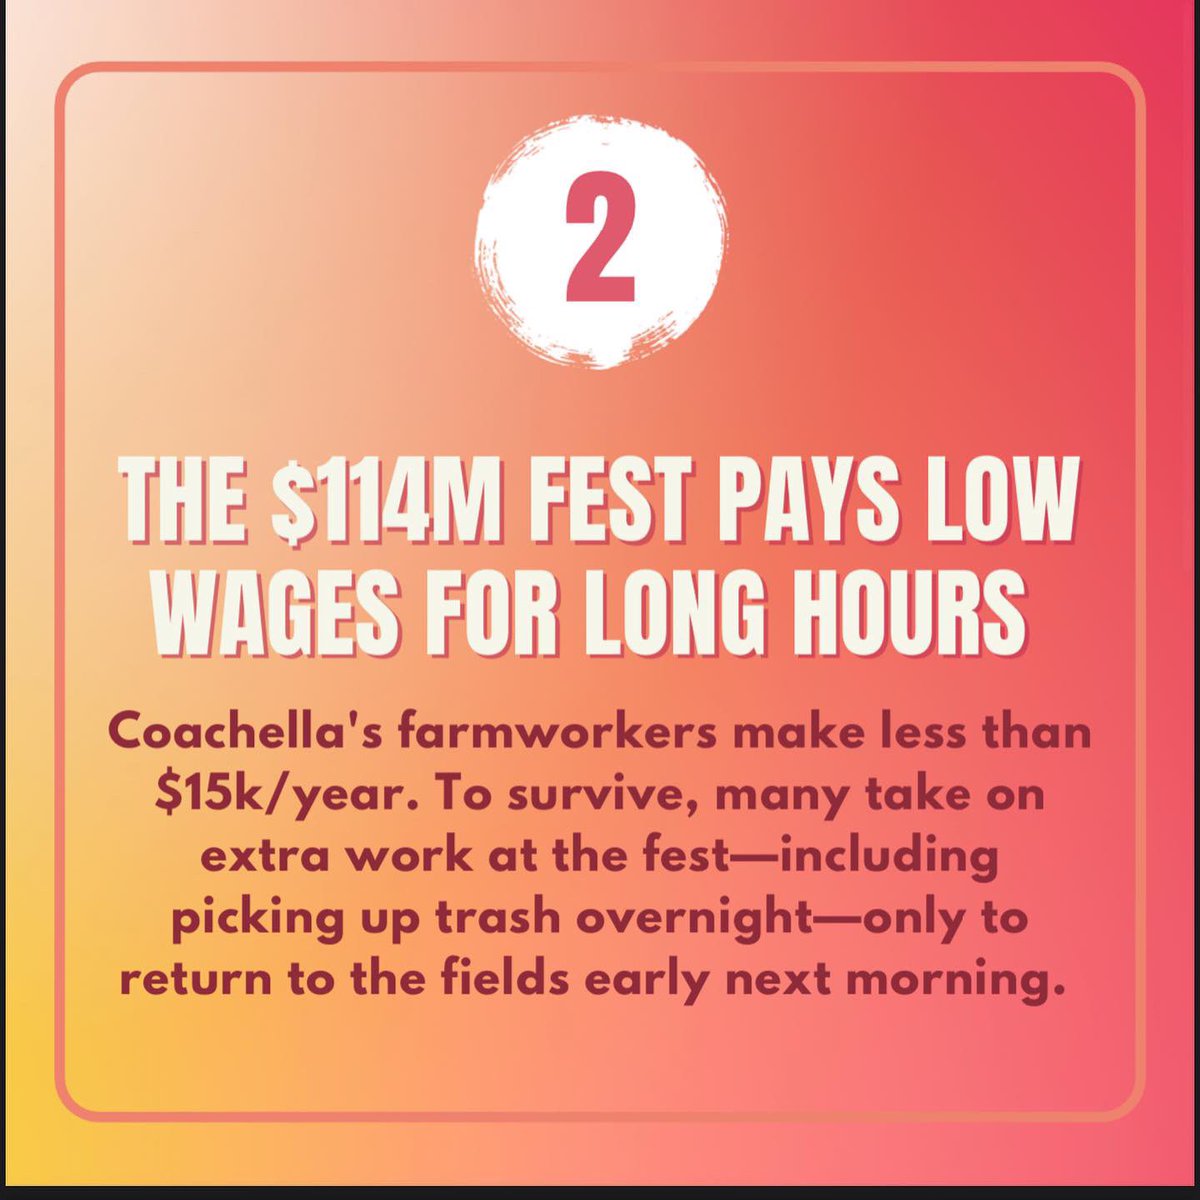 The $114 million festival pays low wages for long hours. #Coachella #Coachella2022